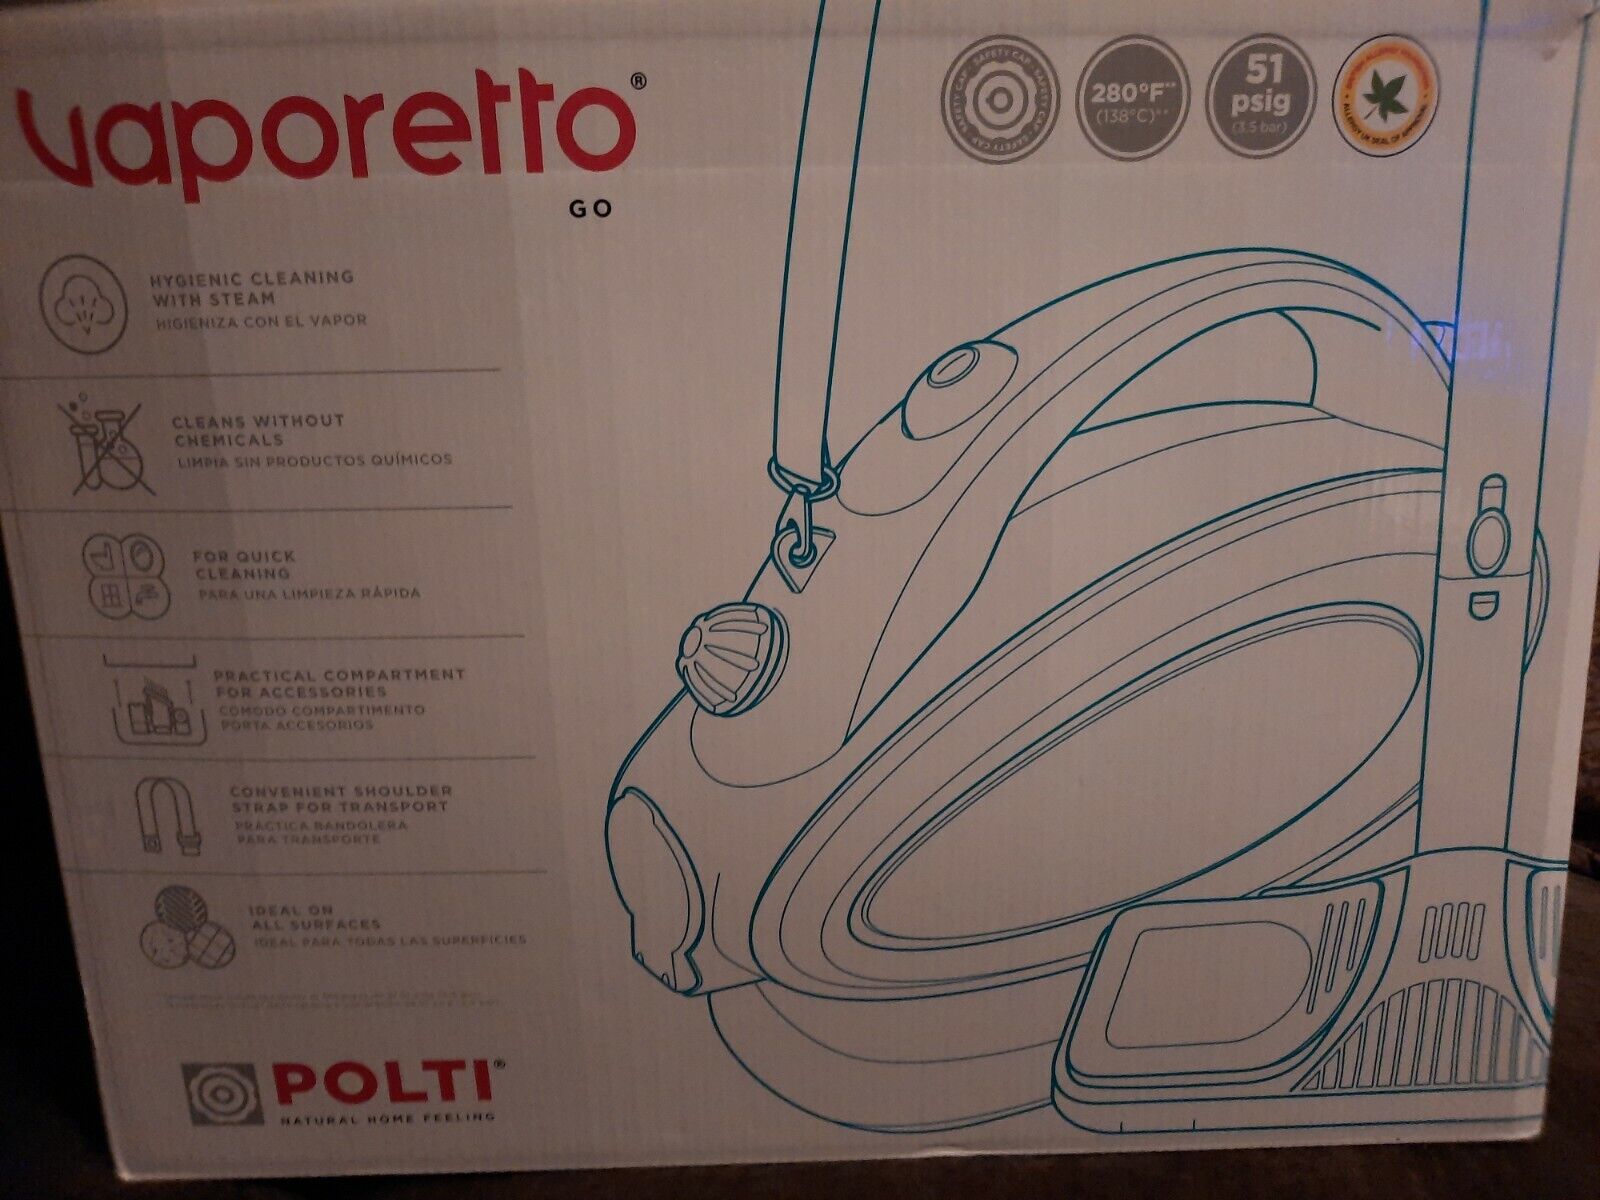 Polti Vaporetto Smart 40 Steamer (51 PSI) tested works